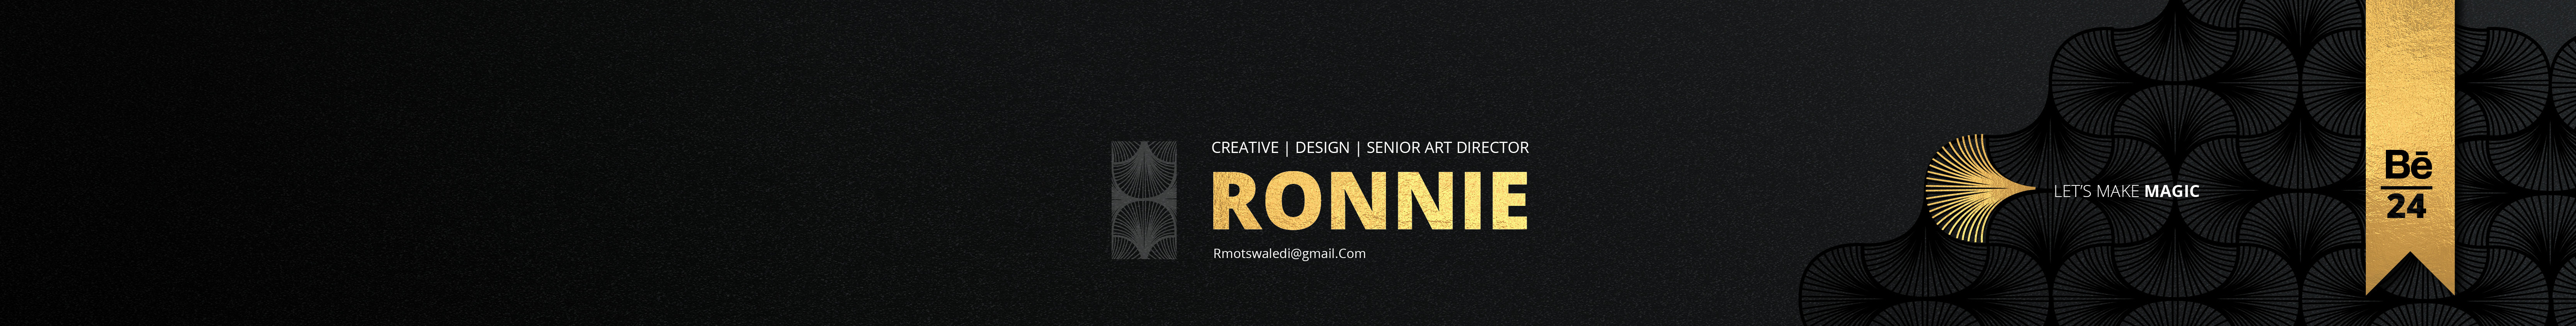 Ronnie Motswaledi's profile banner